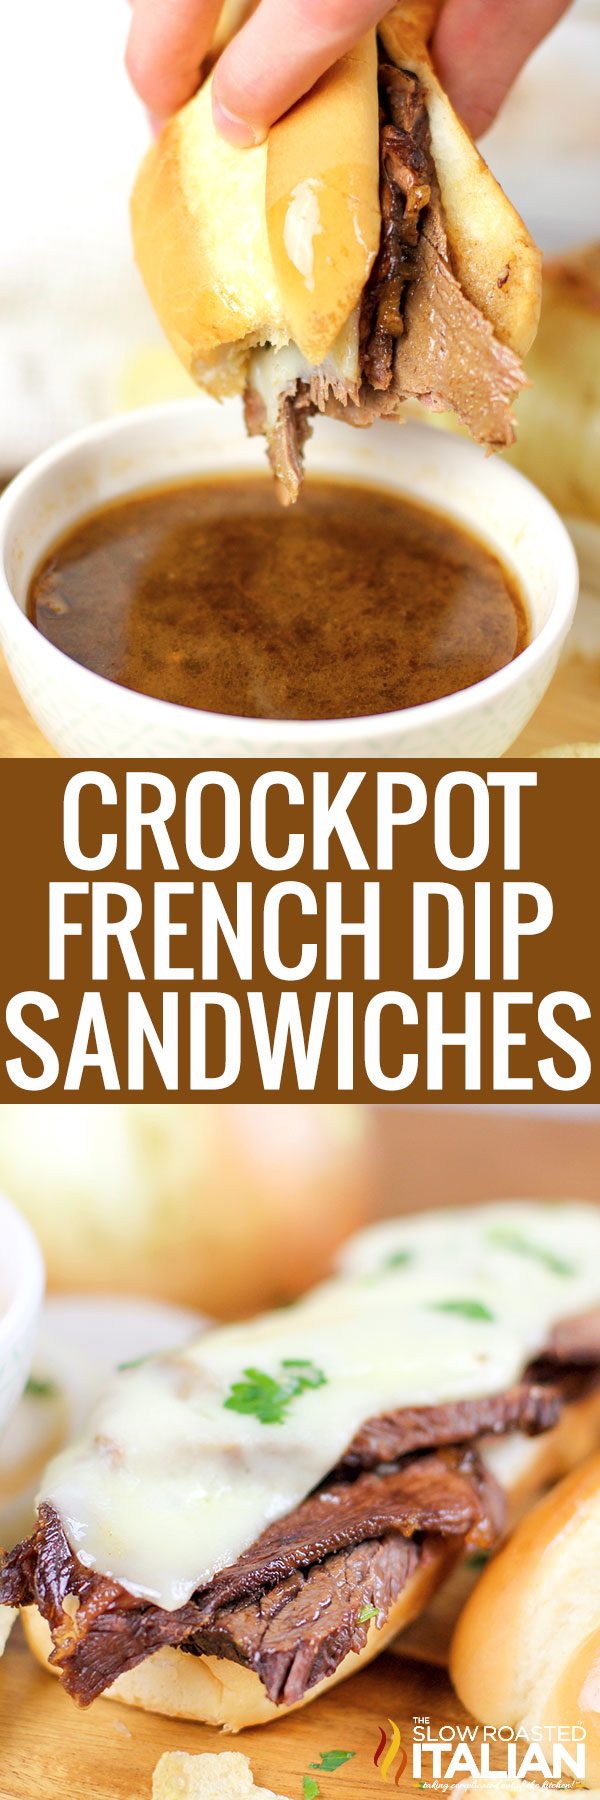 crockpot french dip sandwiches -pin